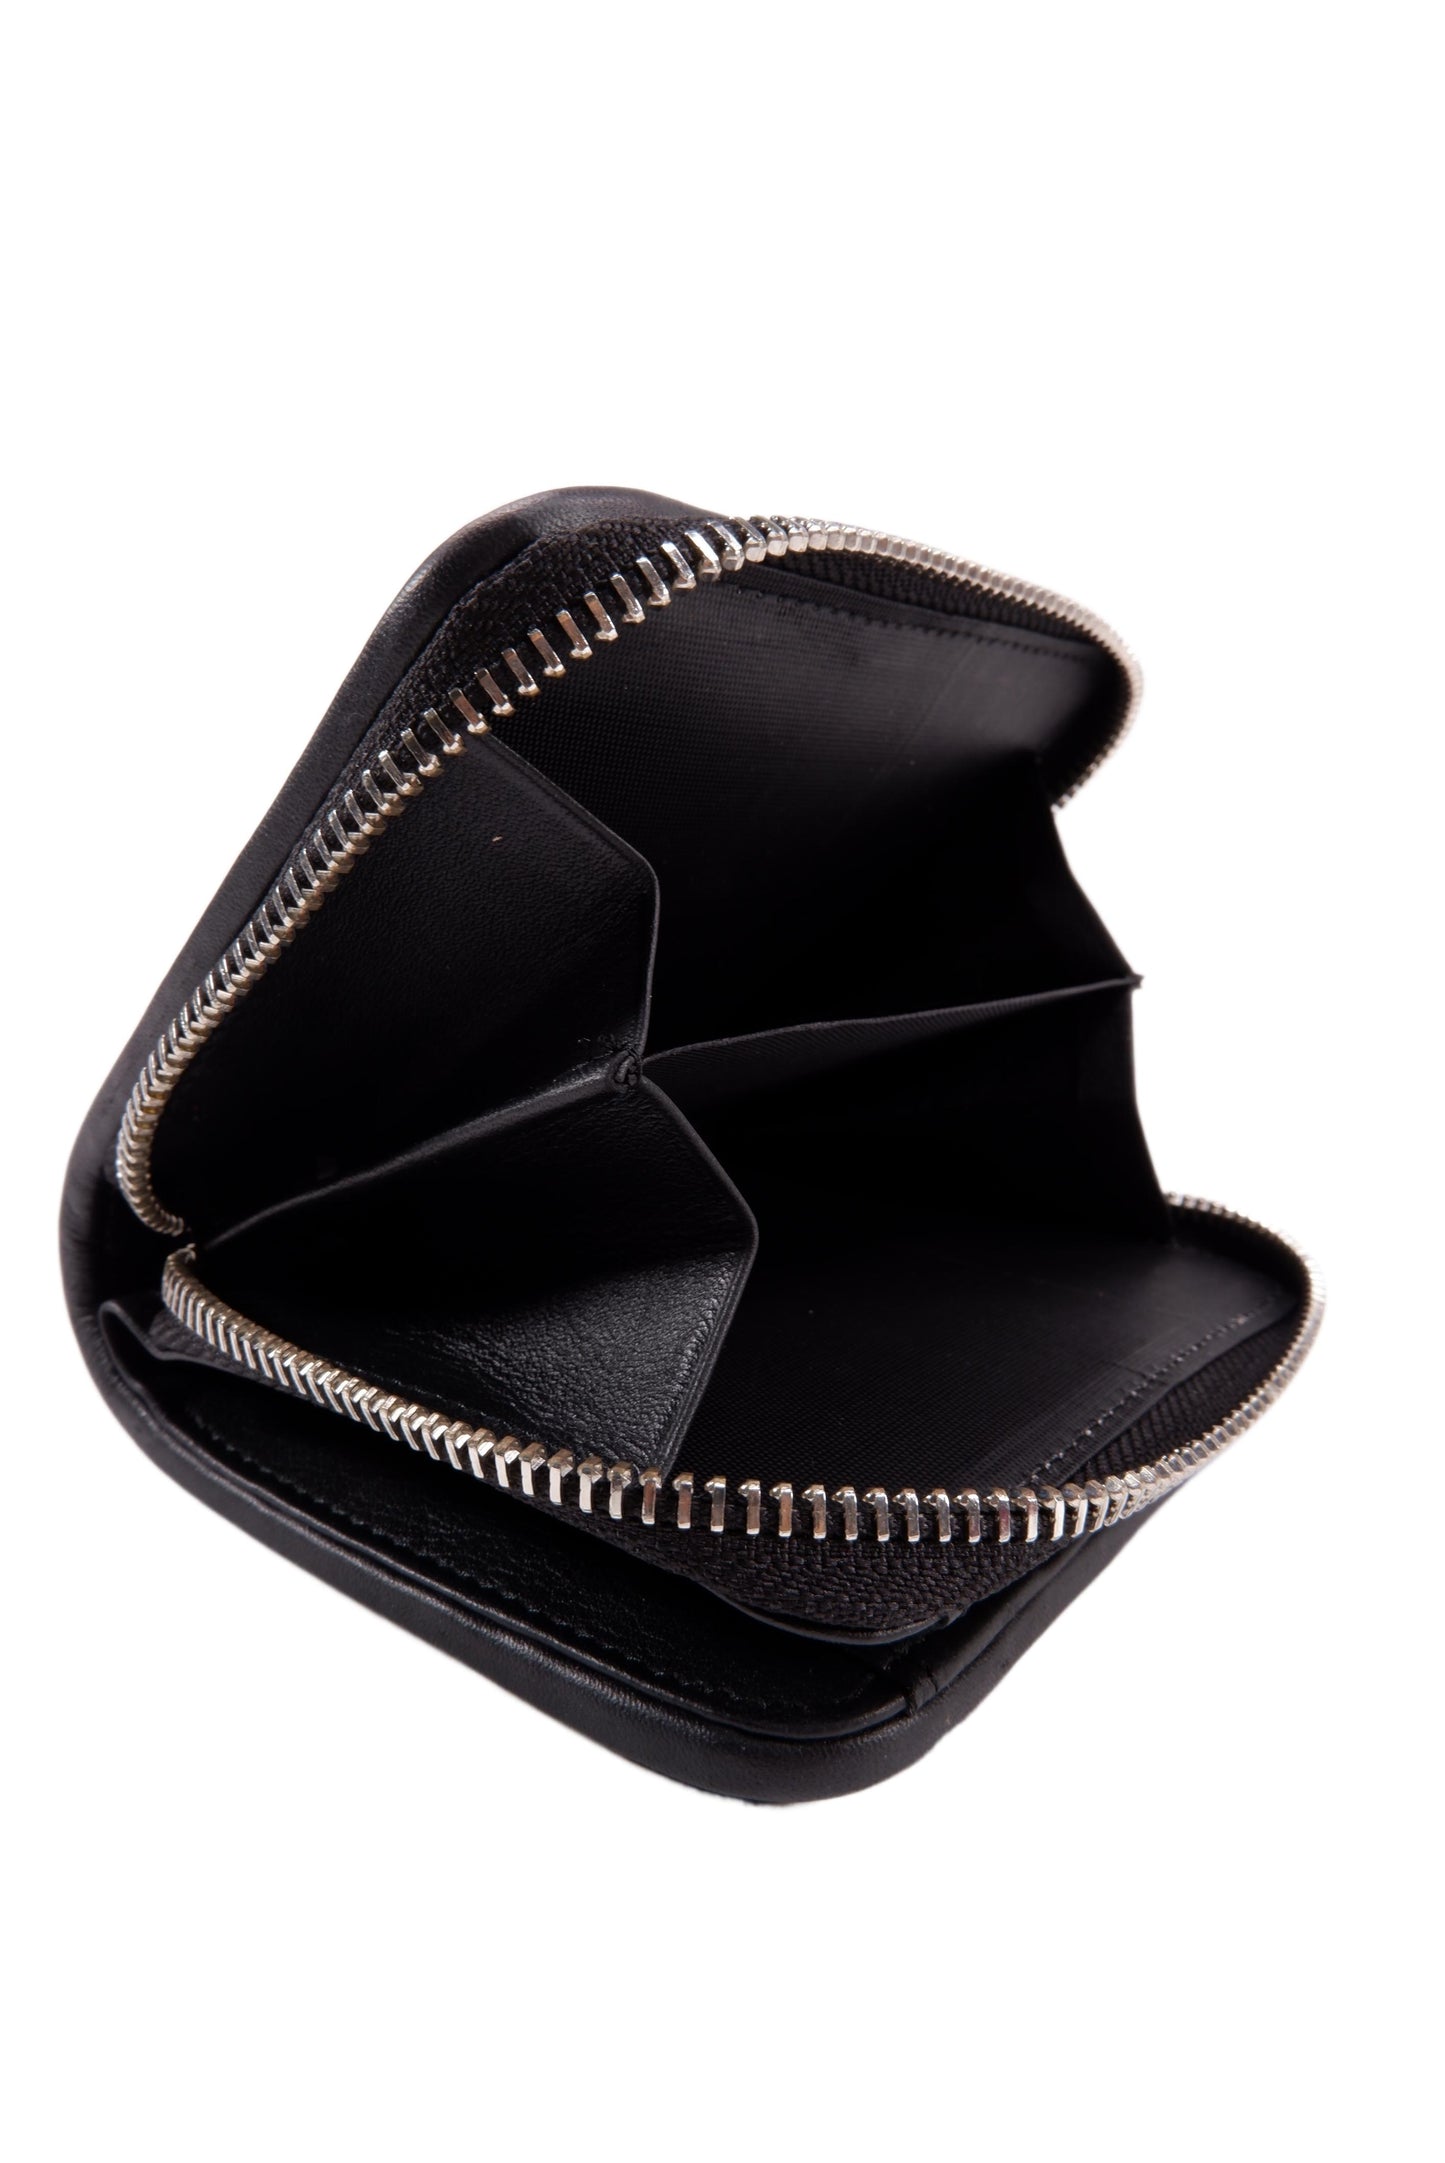 Genuine Polished Stingray Skin Leather Intrecciato Handmade Medium Zip Around Clutch Wallet Purse